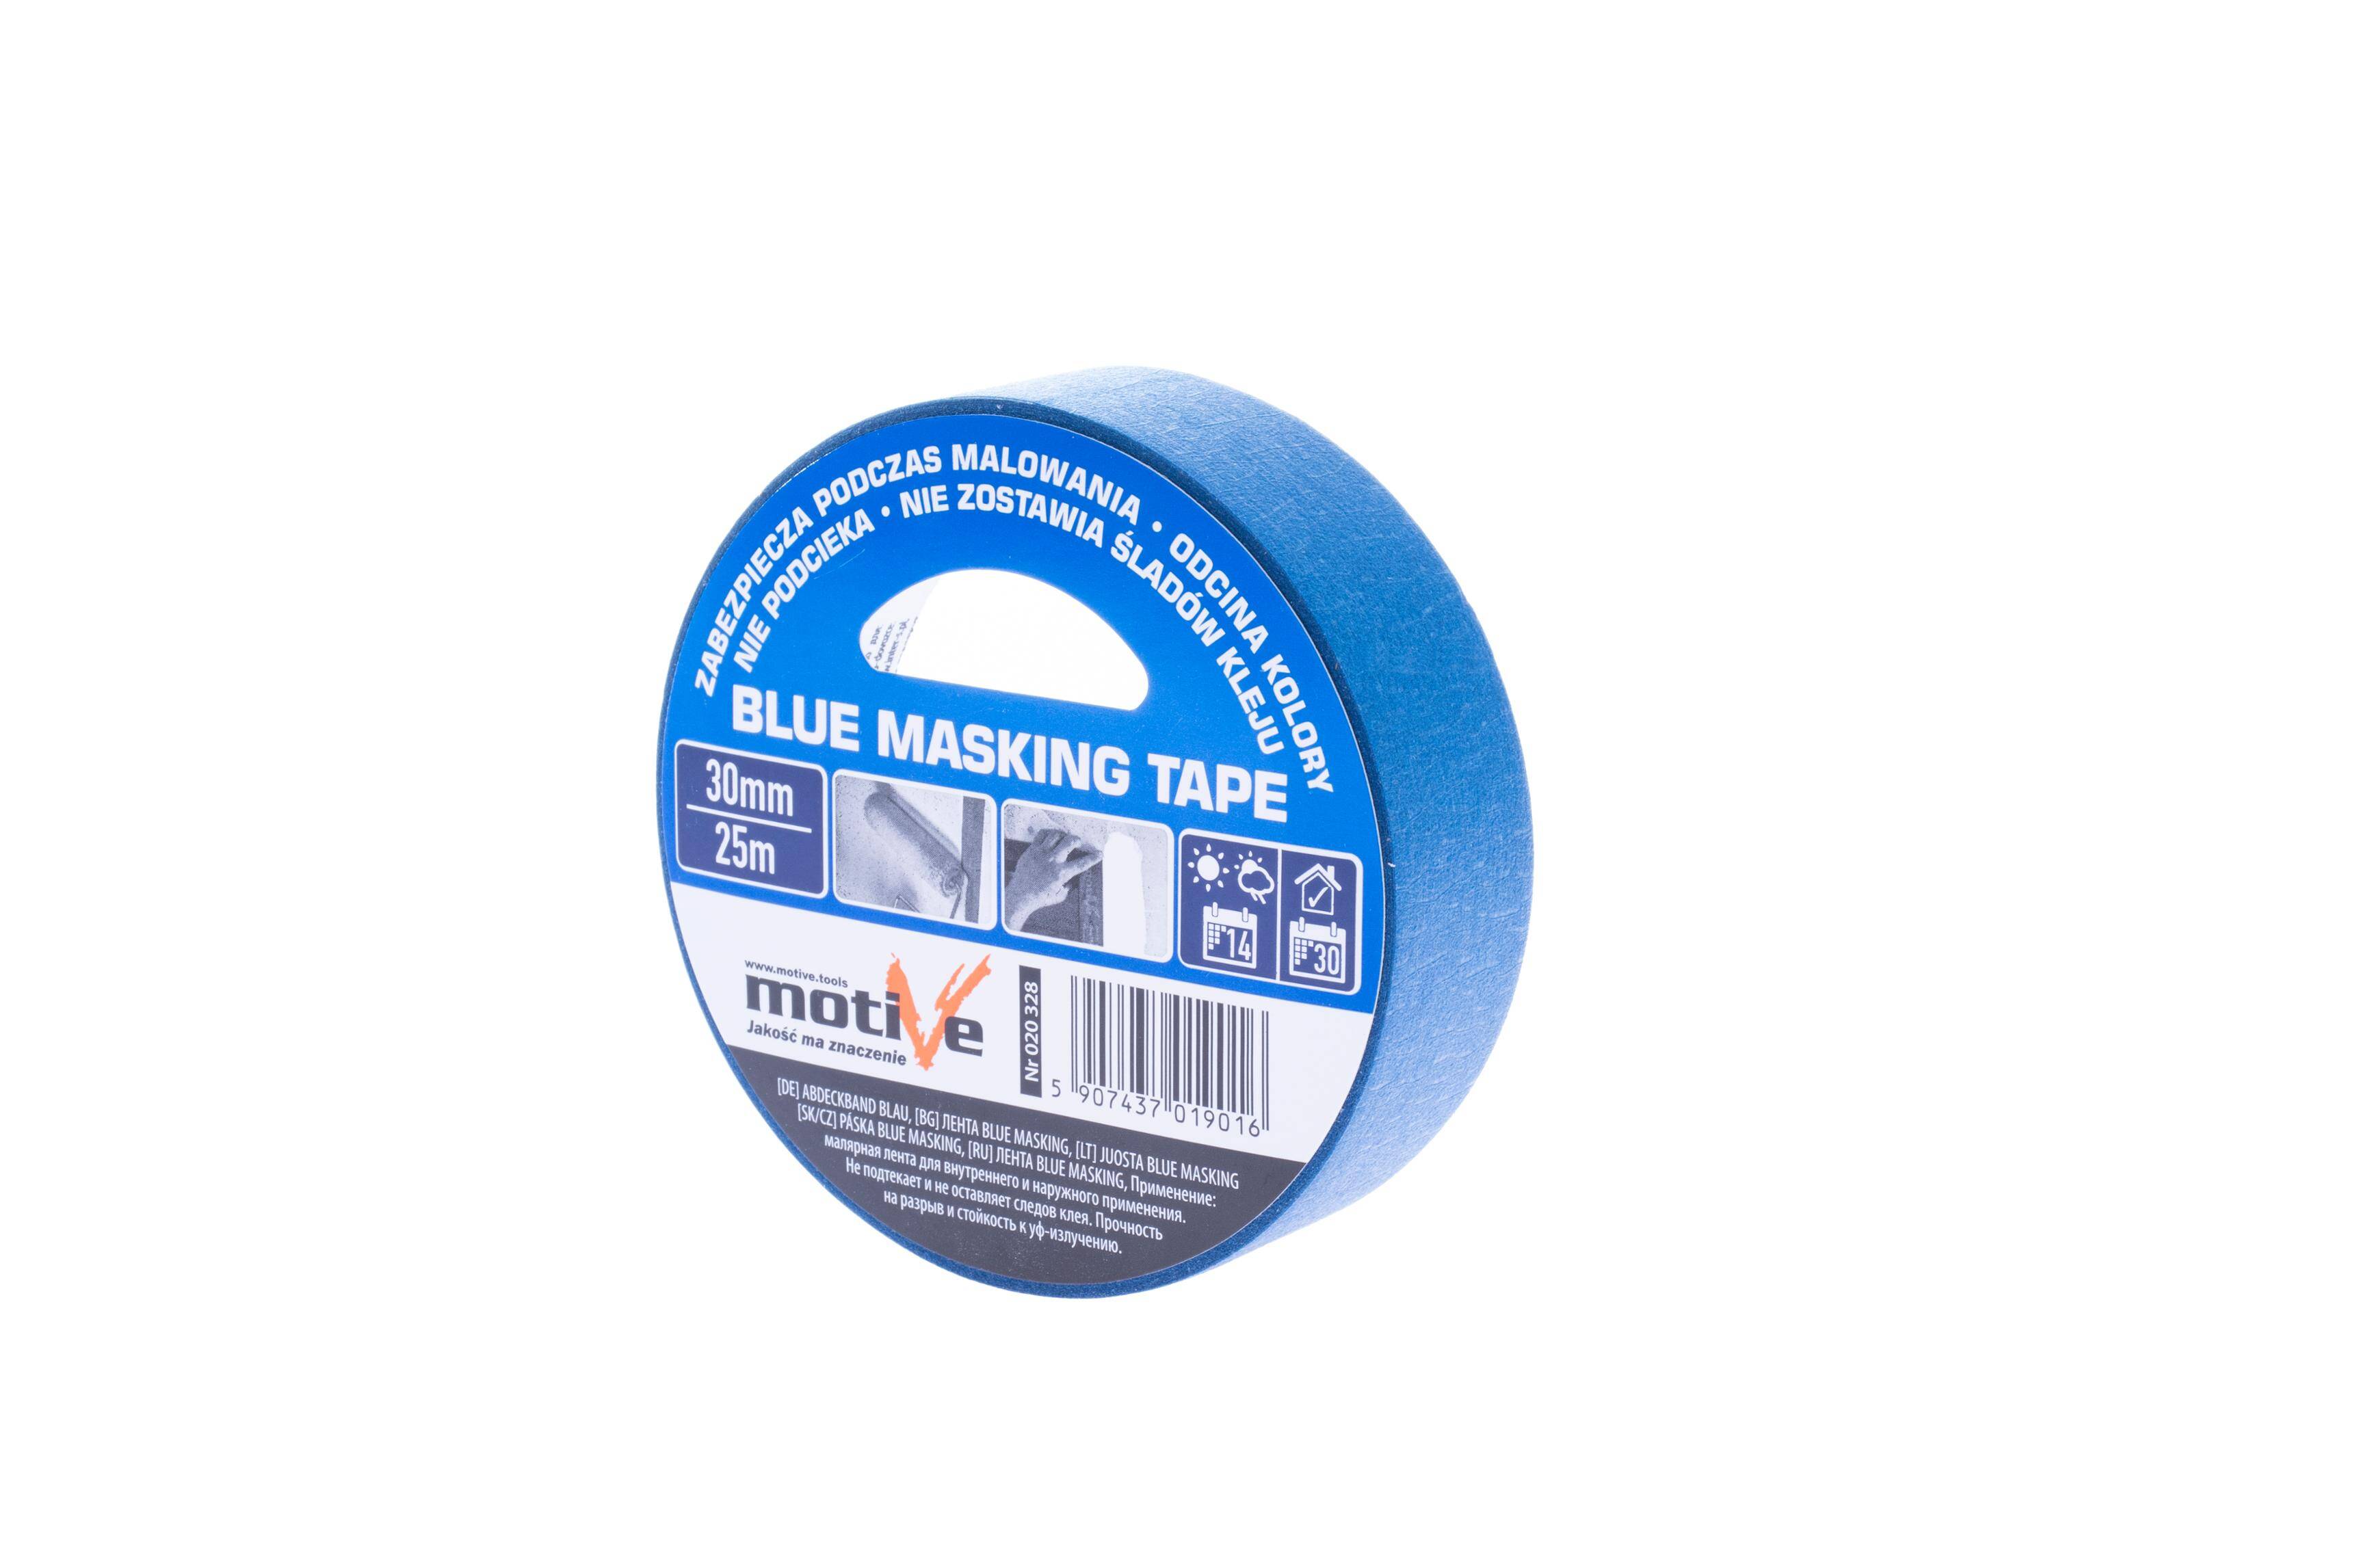 Blue masking tape 30mm/25m